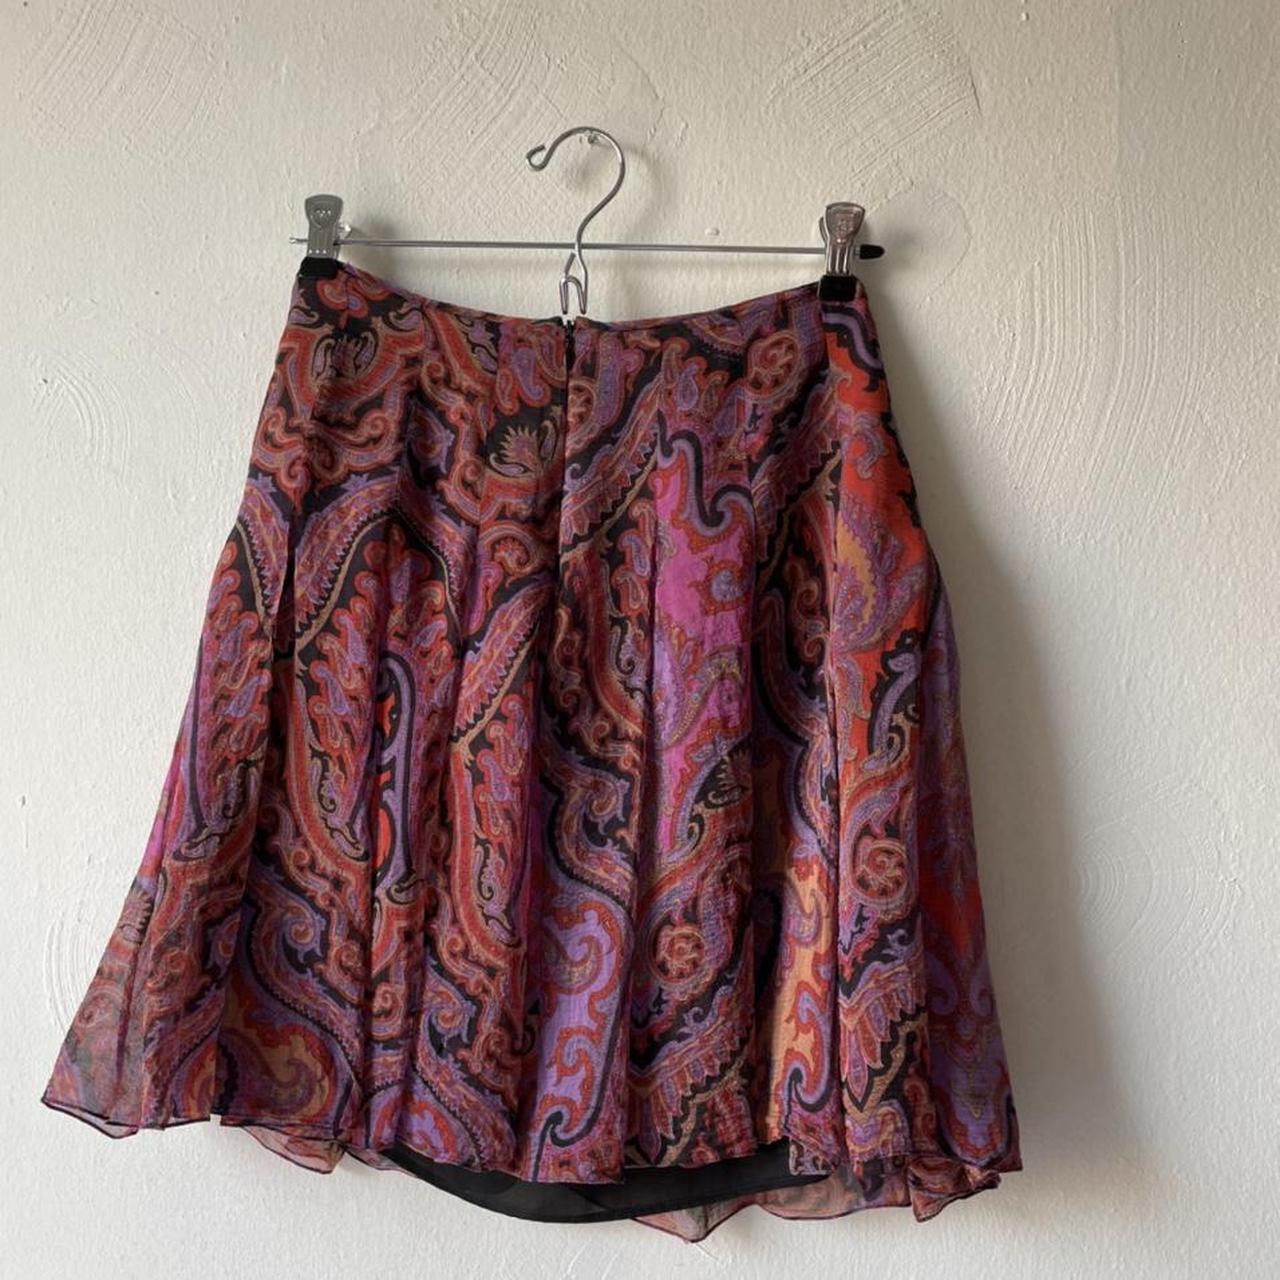 Anna Sui Women's Orange and Burgundy Skirt (2)